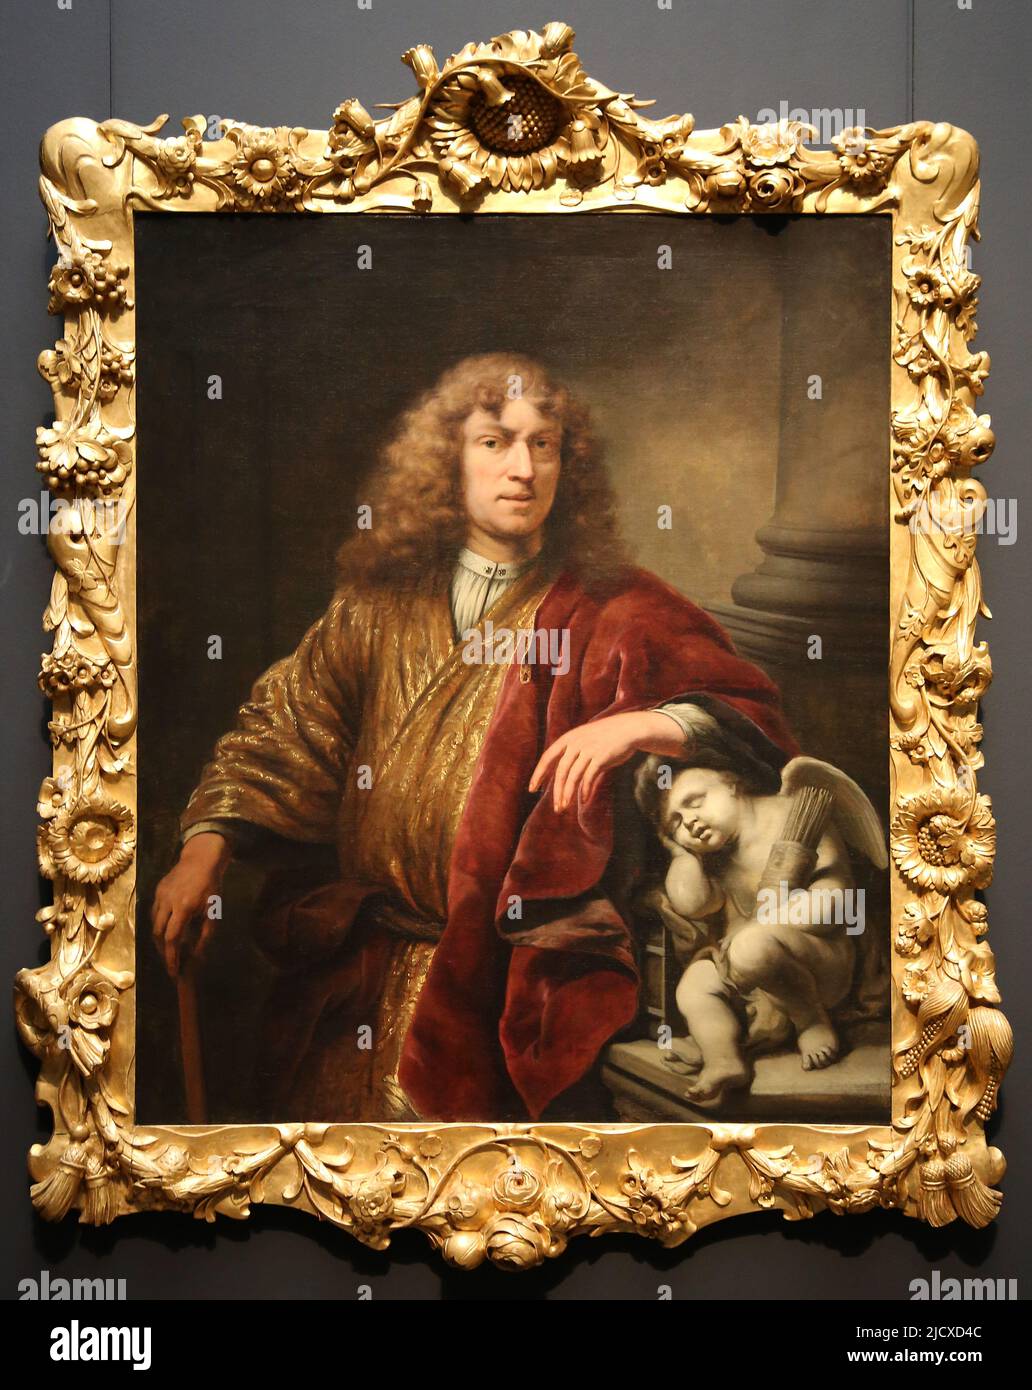 Ferdinand Bol (1616-1680). Self-portrait. Oil on canvas, c. 1669. Rijksmuseum. Amsterdam. Netherlands. Stock Photo